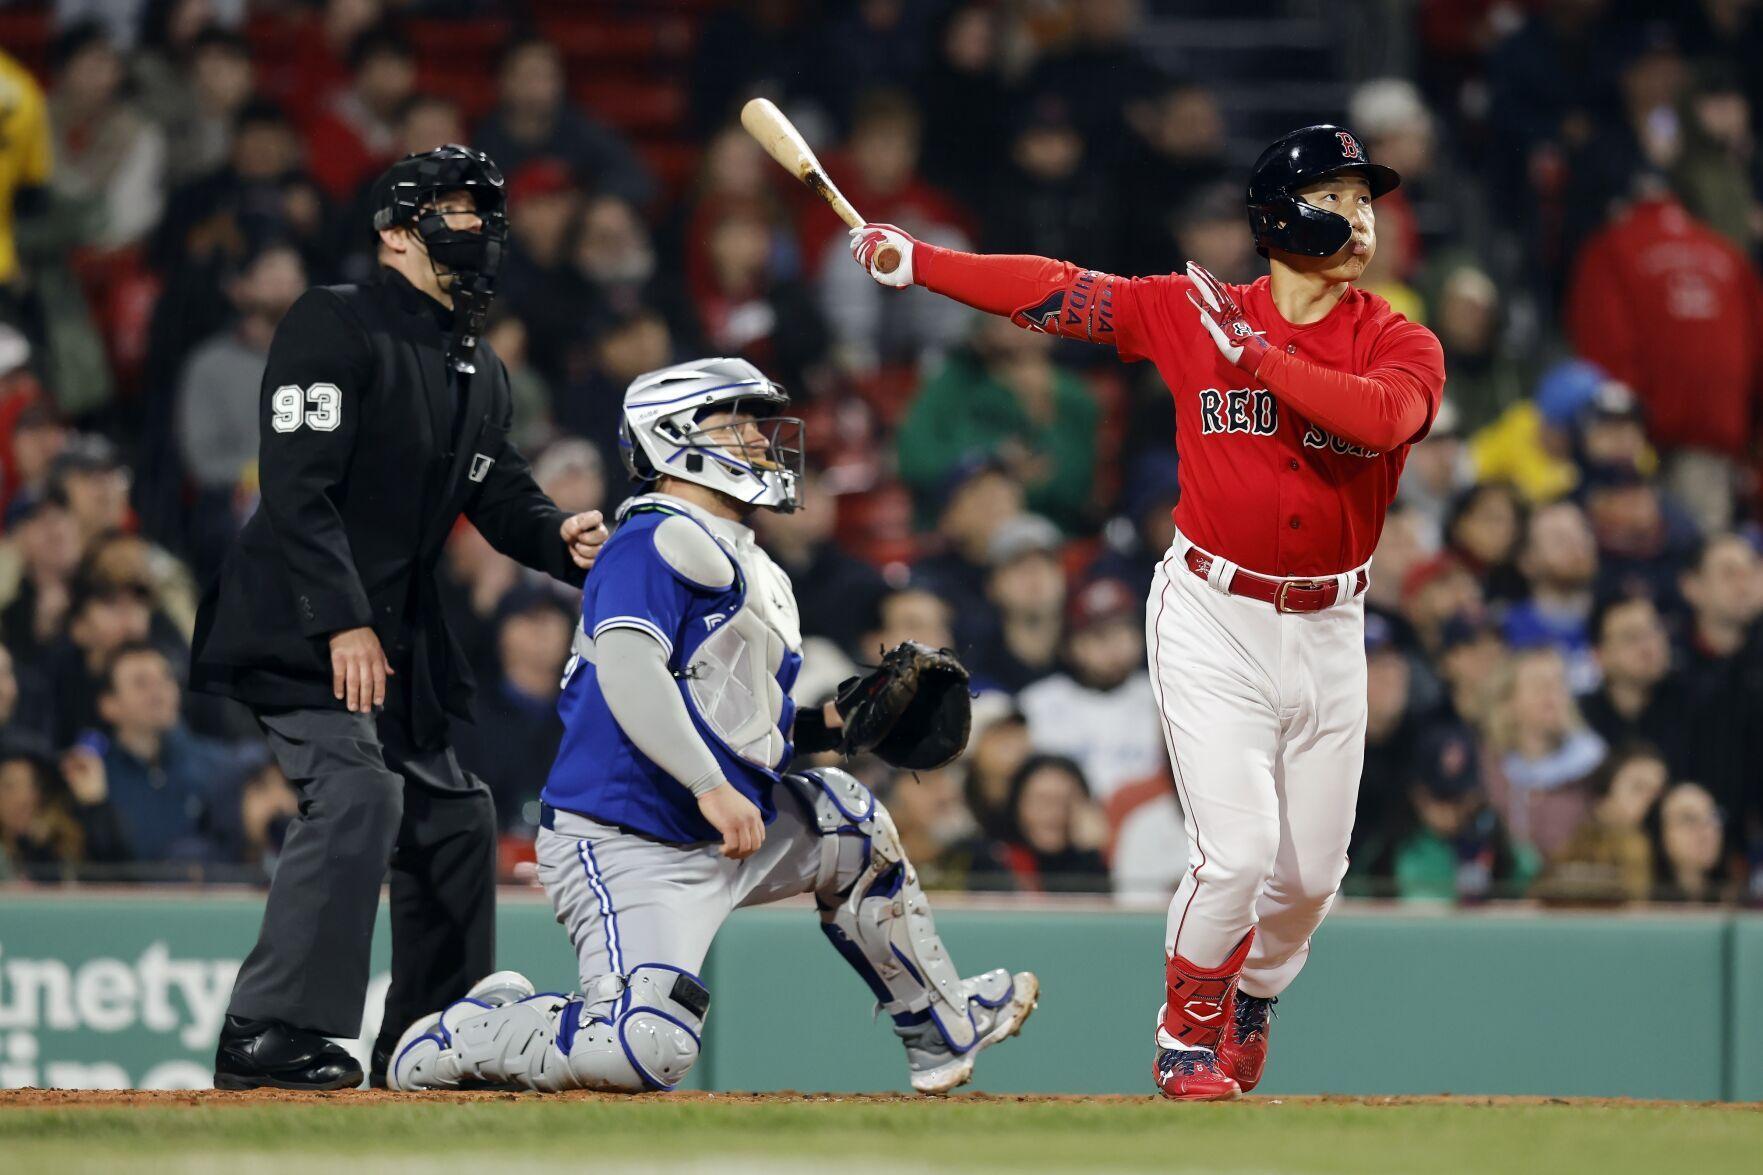 Boston Red Sox recall infielder Bobby Dalbec and left-hander Chris